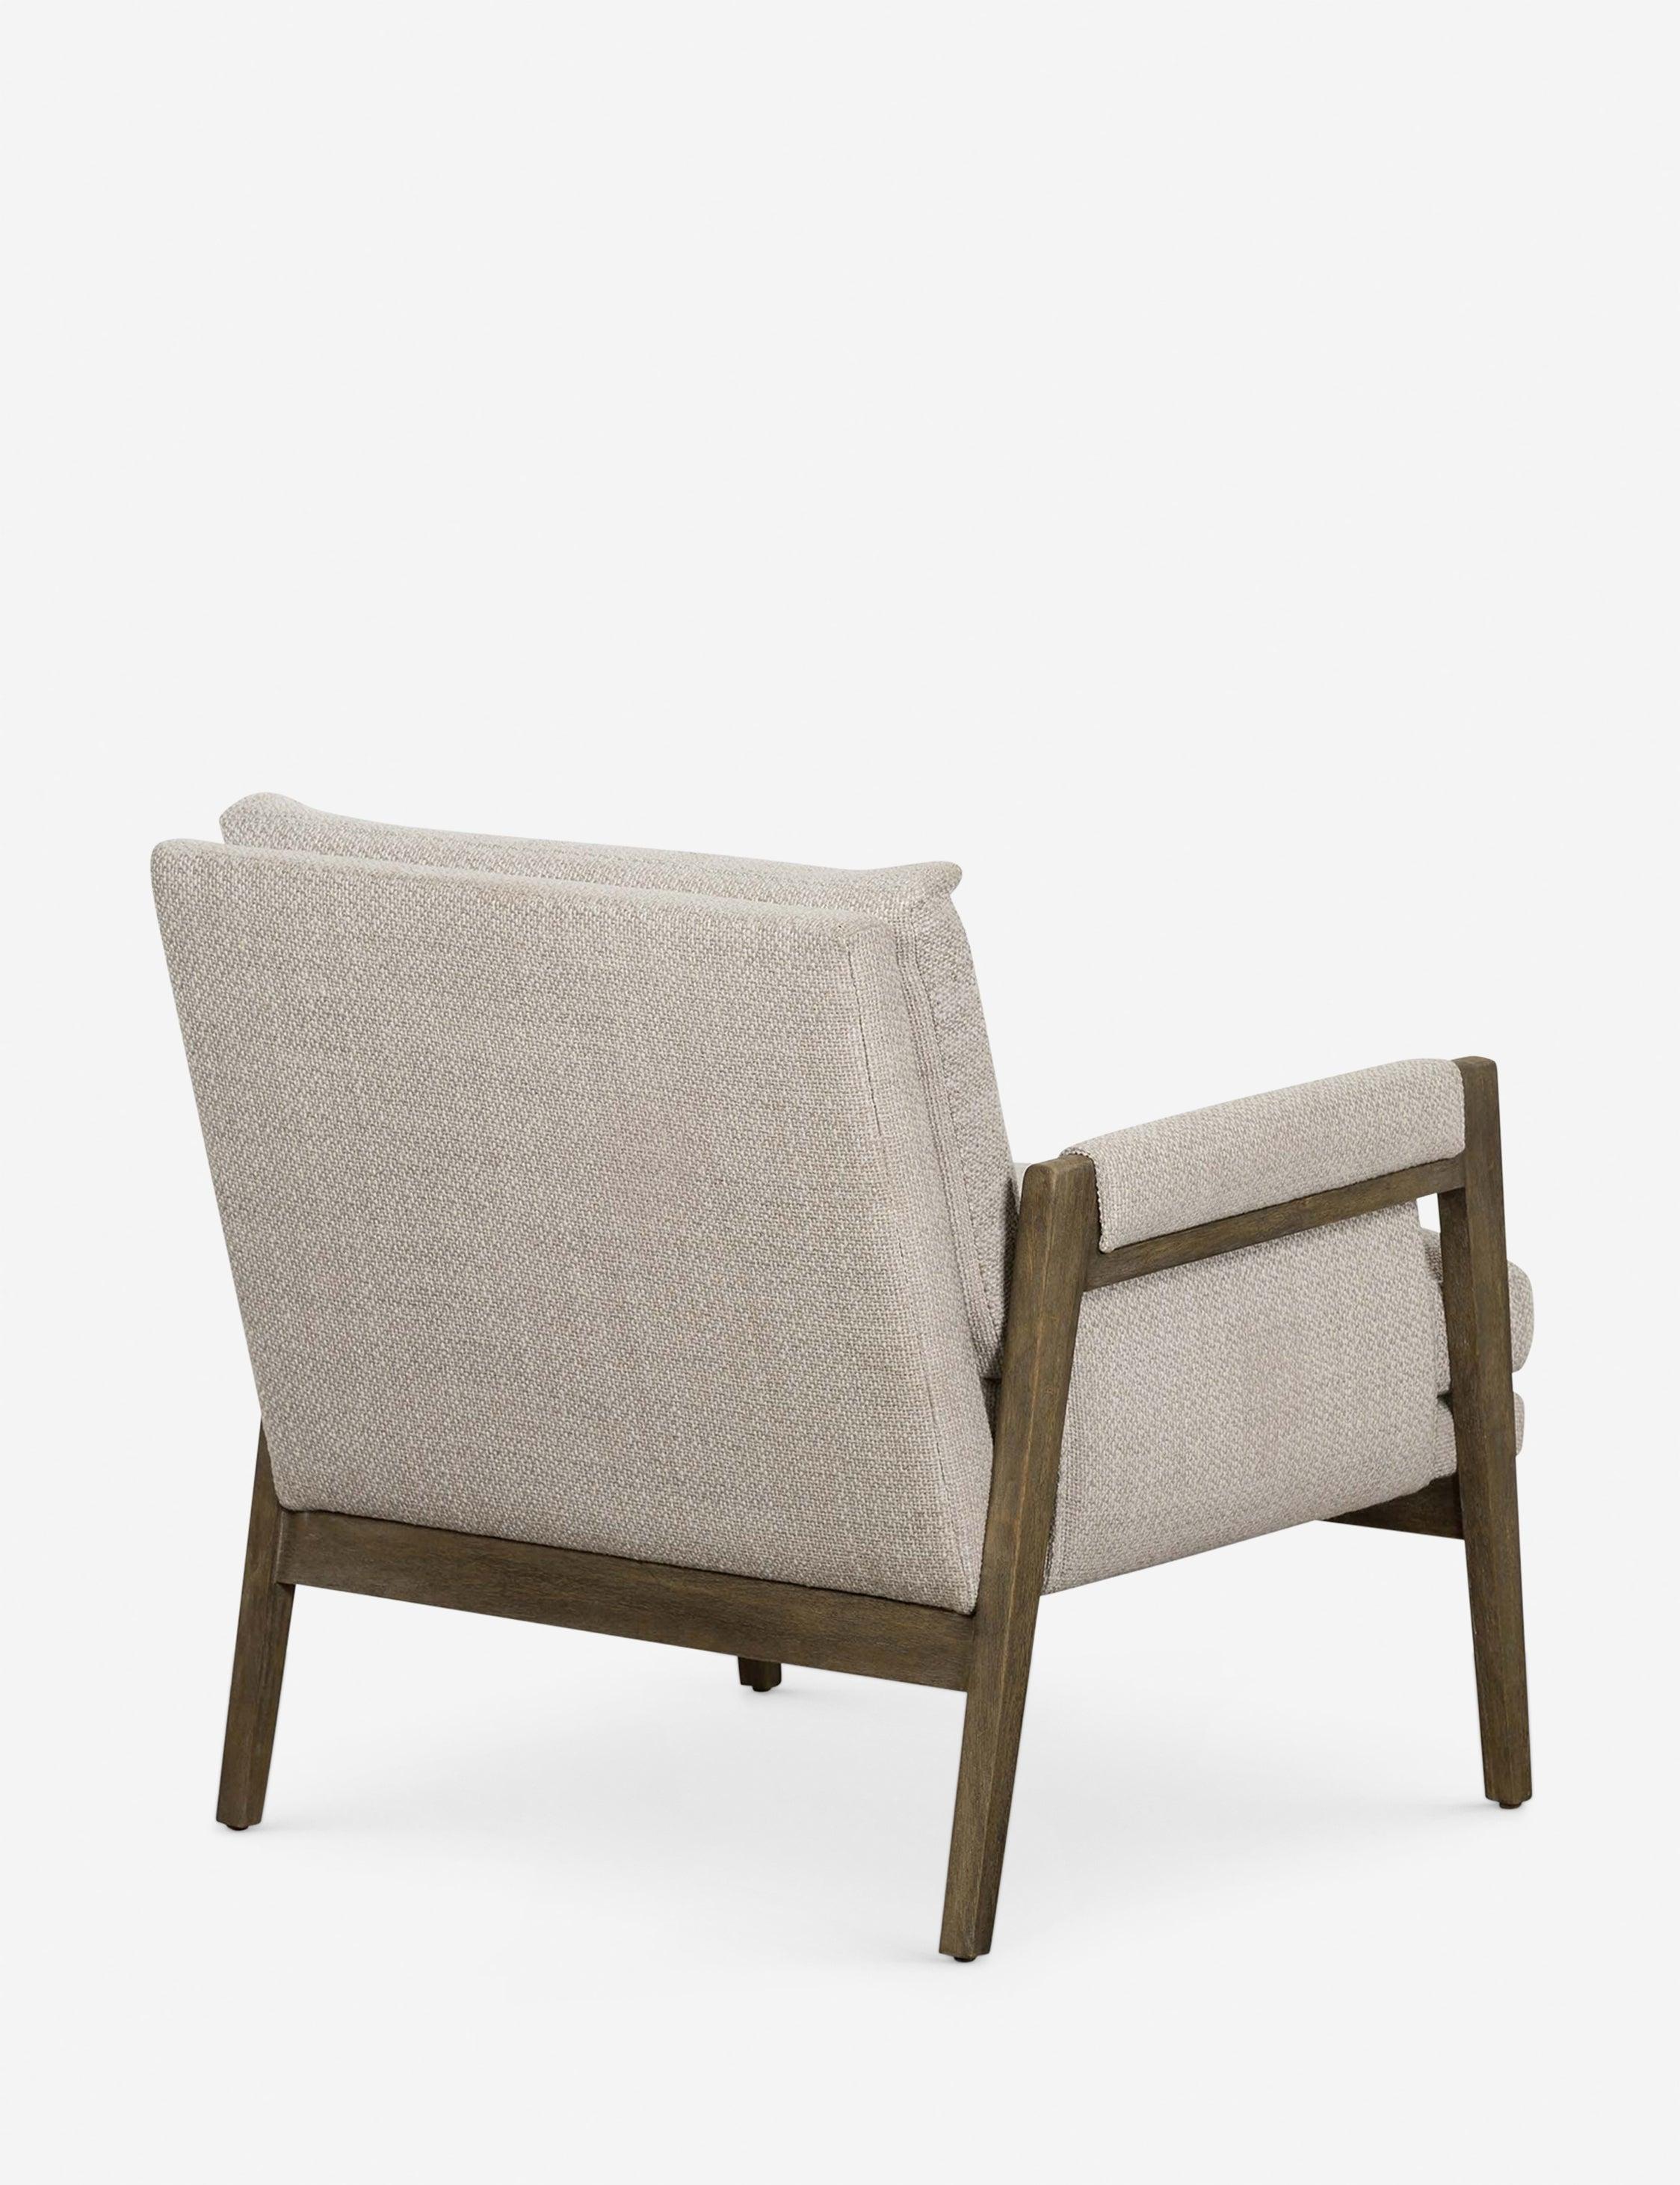 Samara Contemporary Cream Microfiber Accent Chair